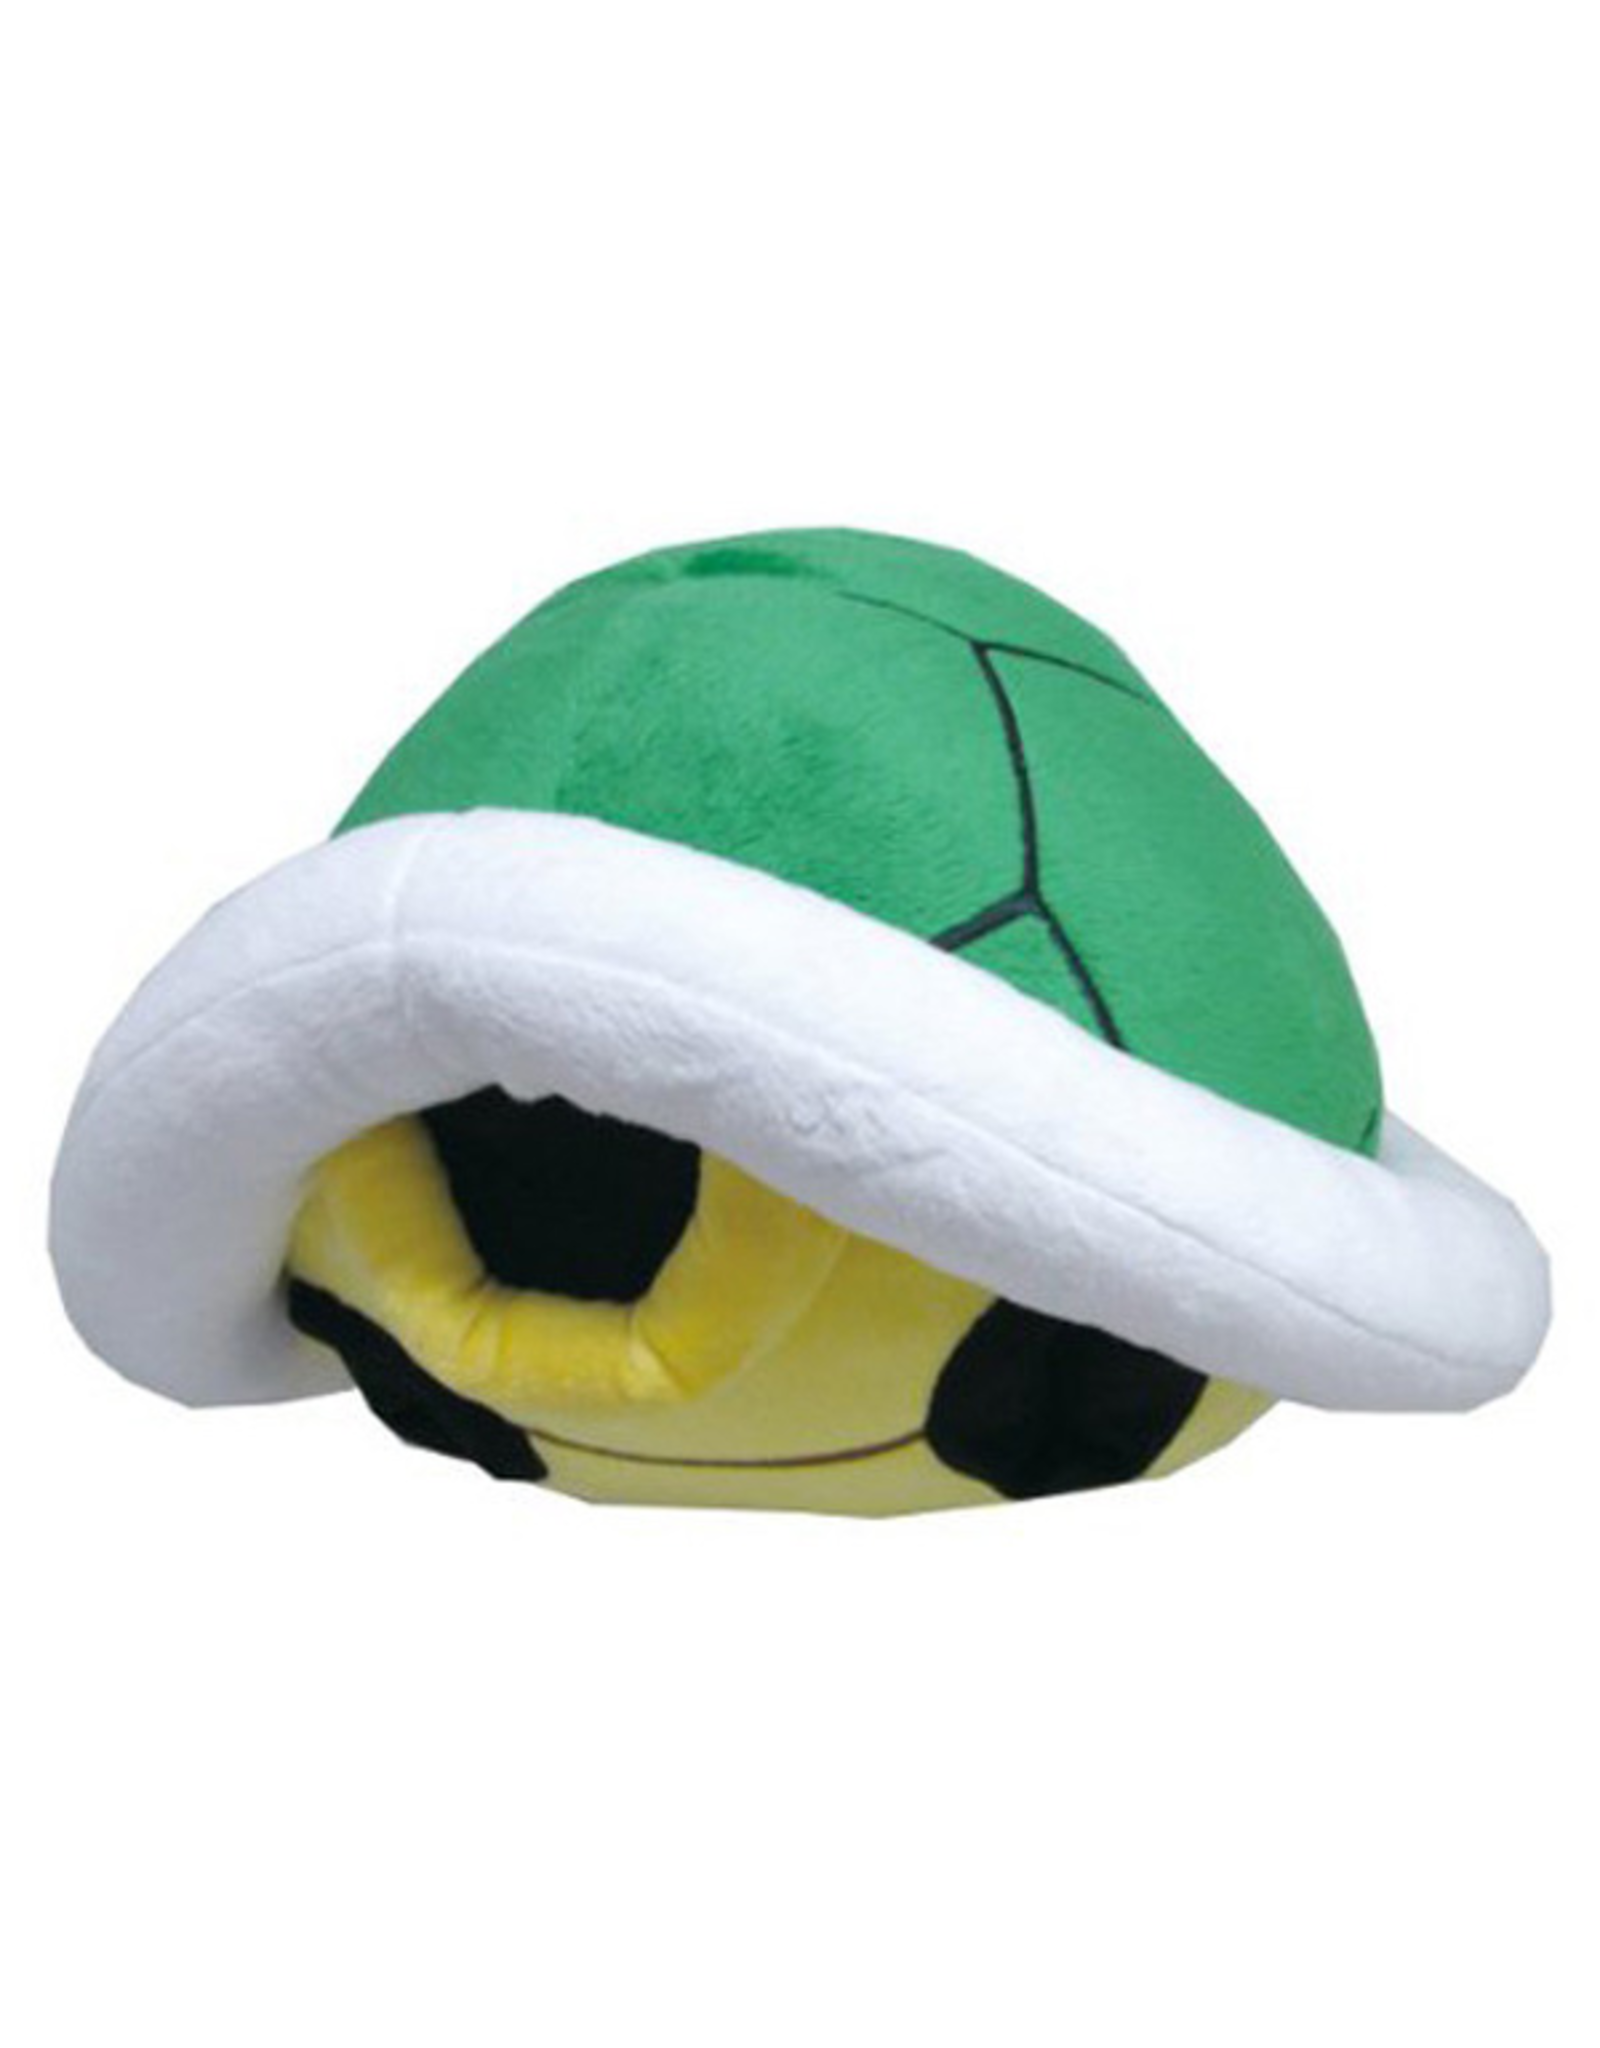 Little Buddy Super Mario Bros - Green Shell - 15" Pillow Plush